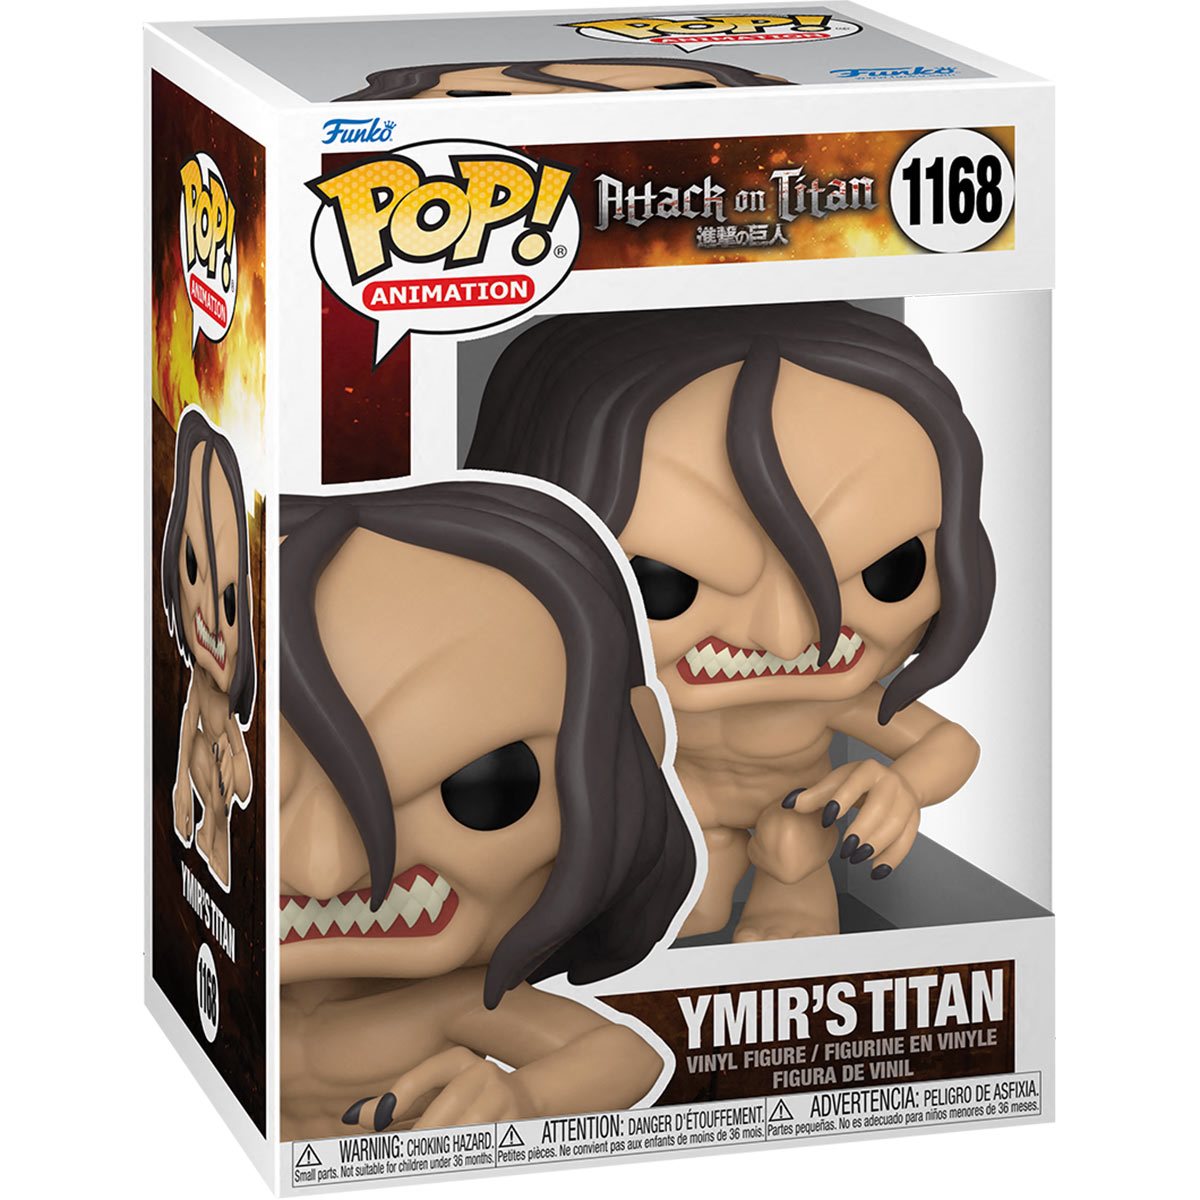 Funko Pop! Attack on Titan - Ymir's Titan